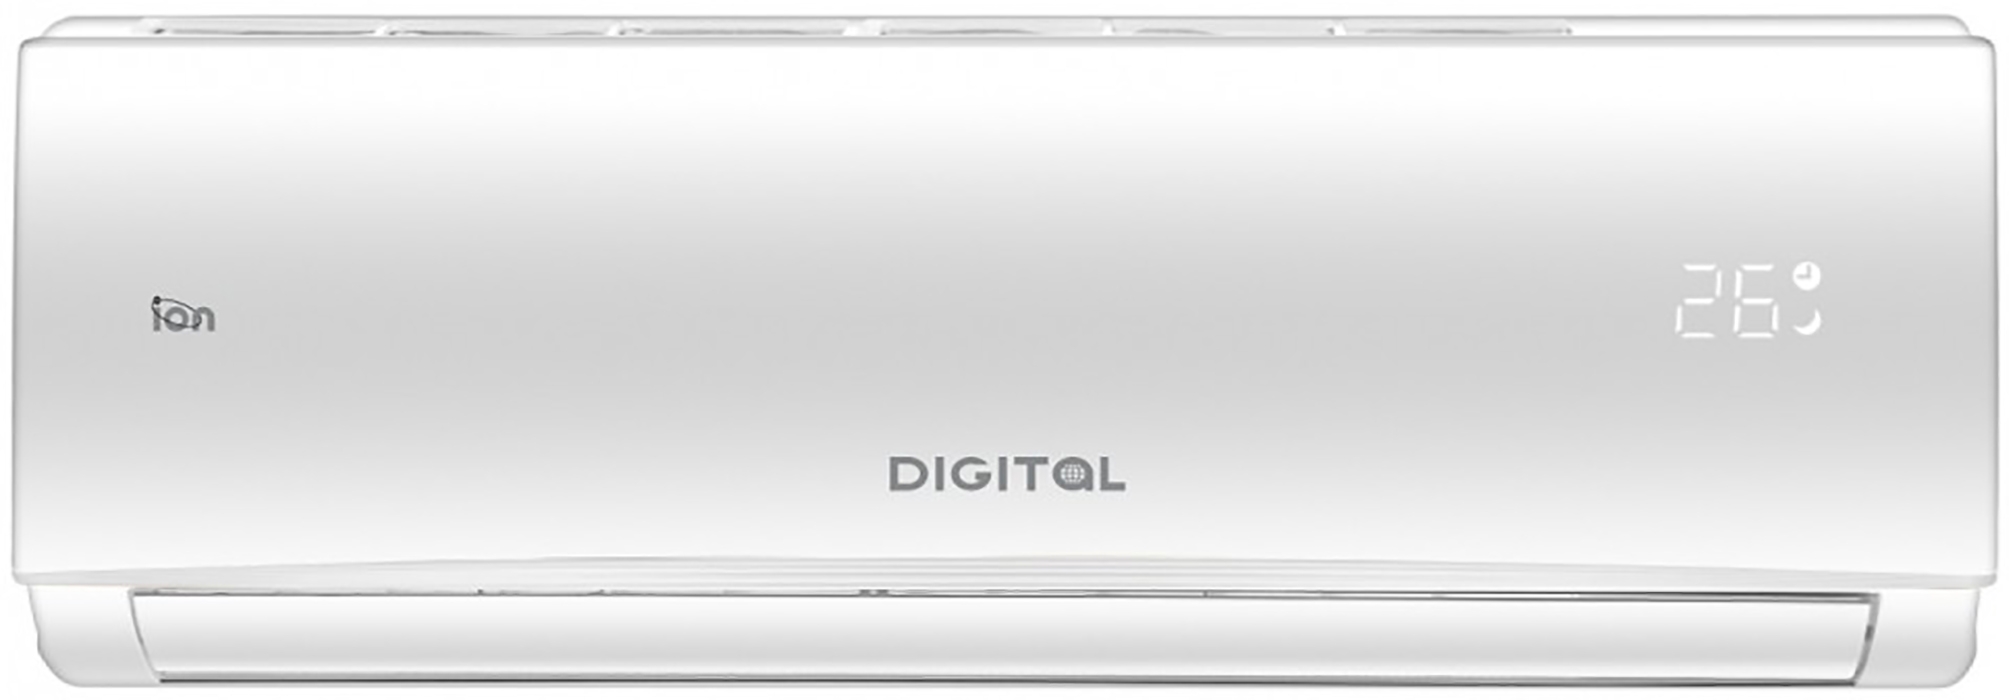 Кондиционер сплит-система Digital DAC-i18SWT (Wi-Fi ready) цена 0.00 грн - фотография 2